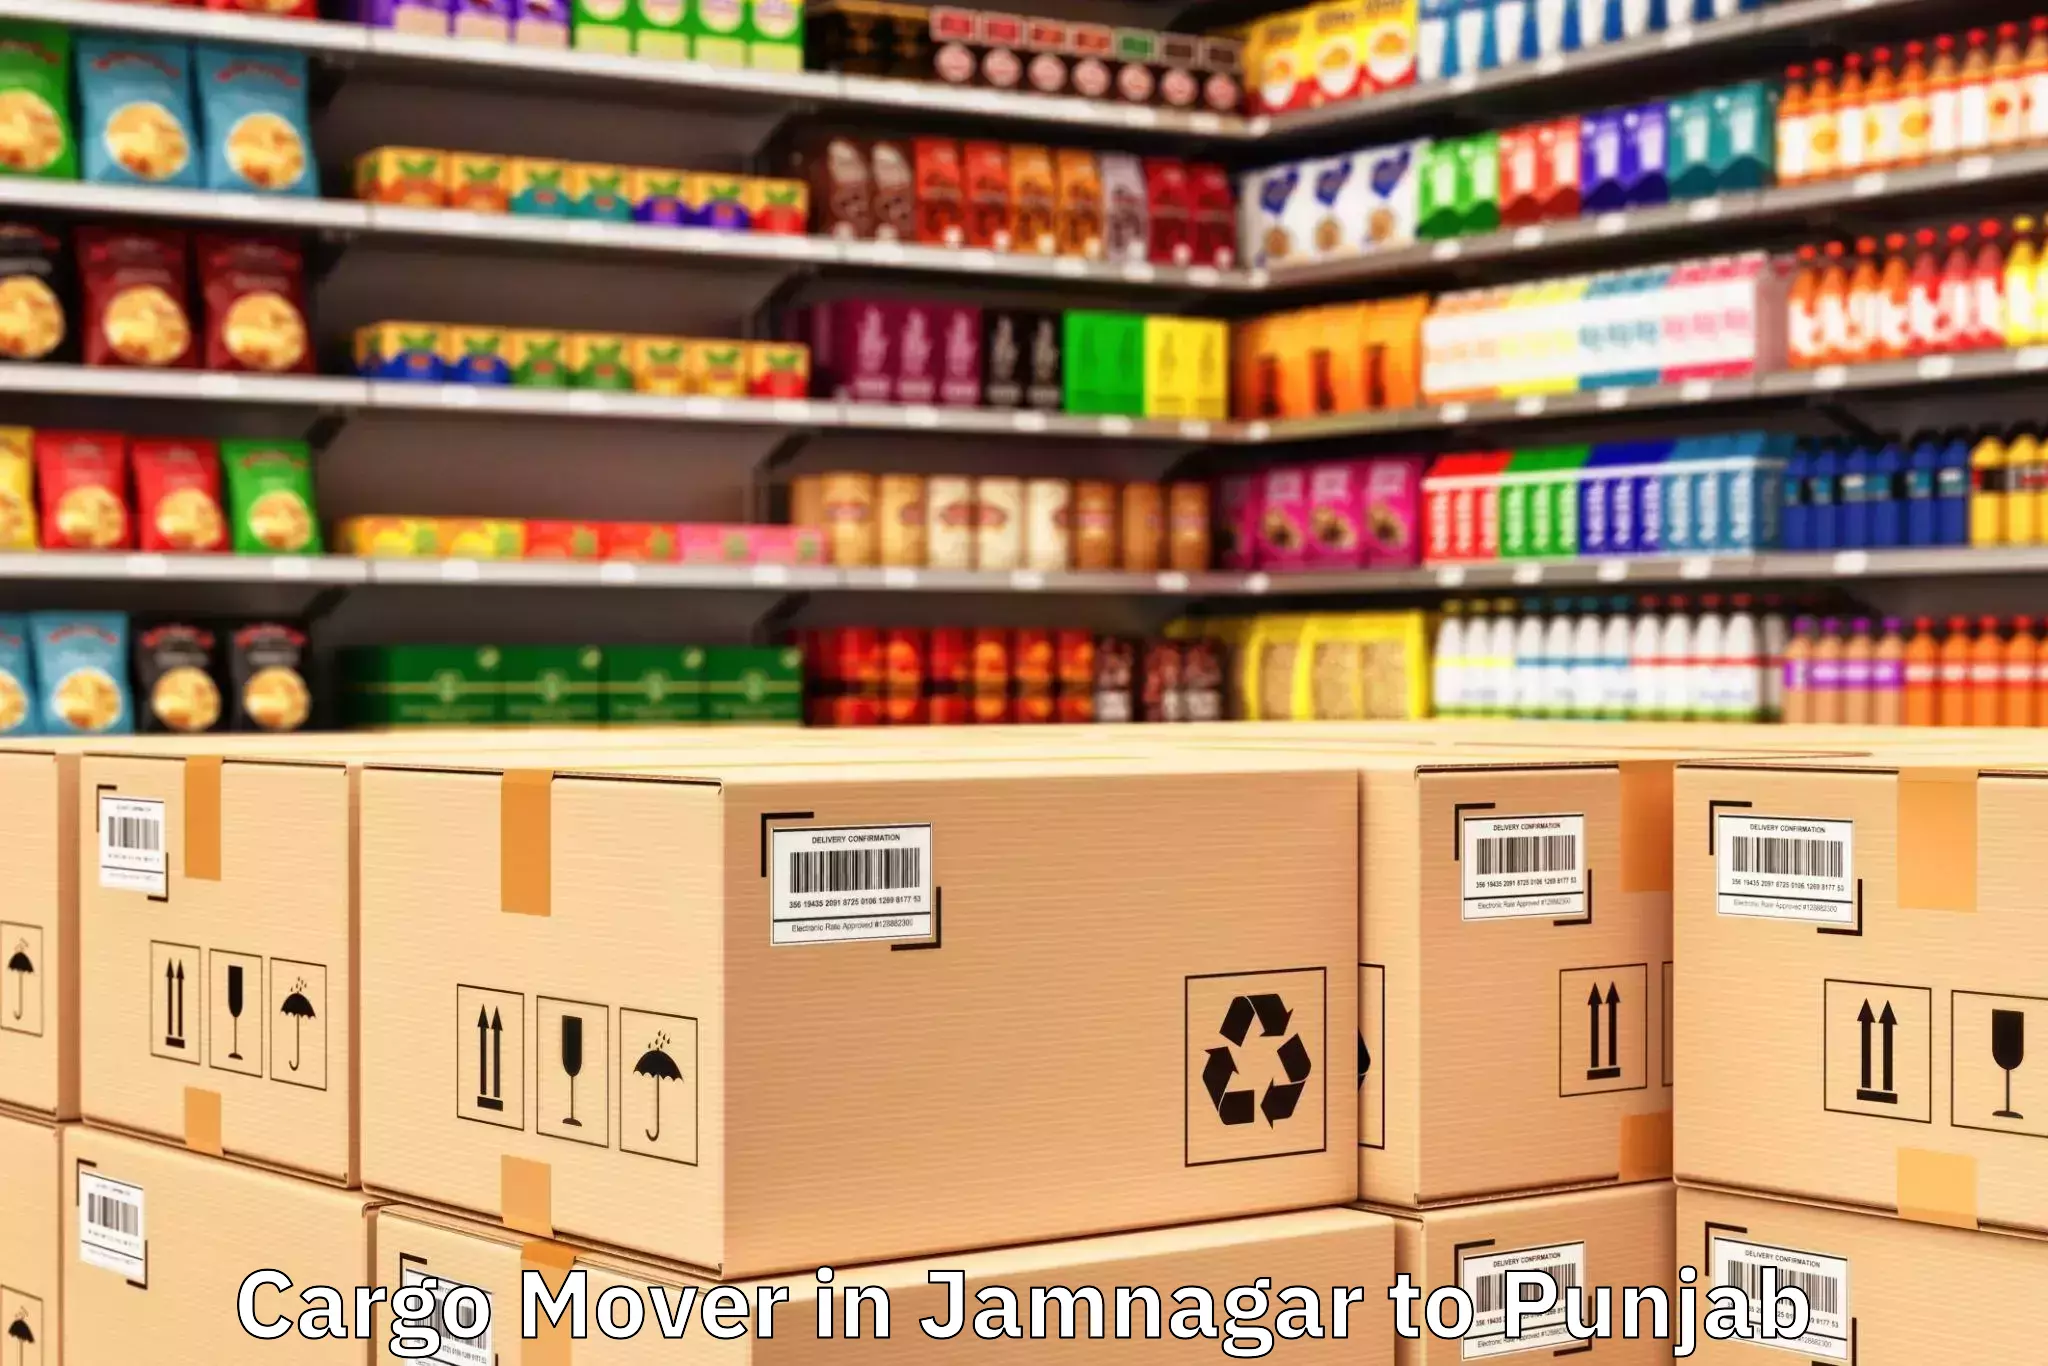 Jamnagar to Patiala Cargo Mover Booking